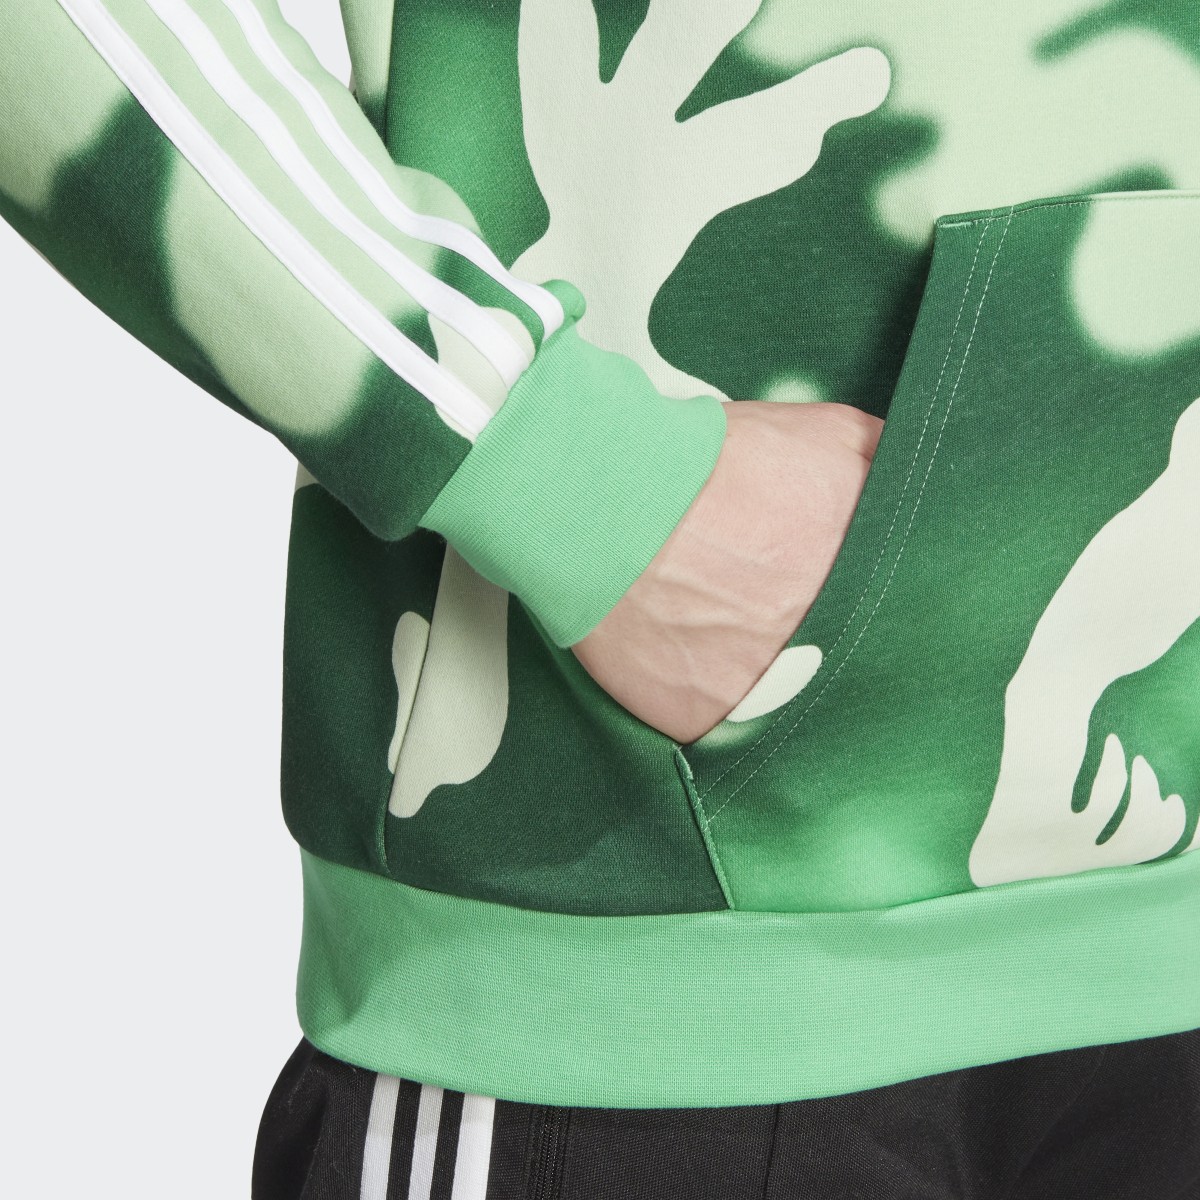 Adidas Sudadera con capucha Graphics Camo Allover Print. 7